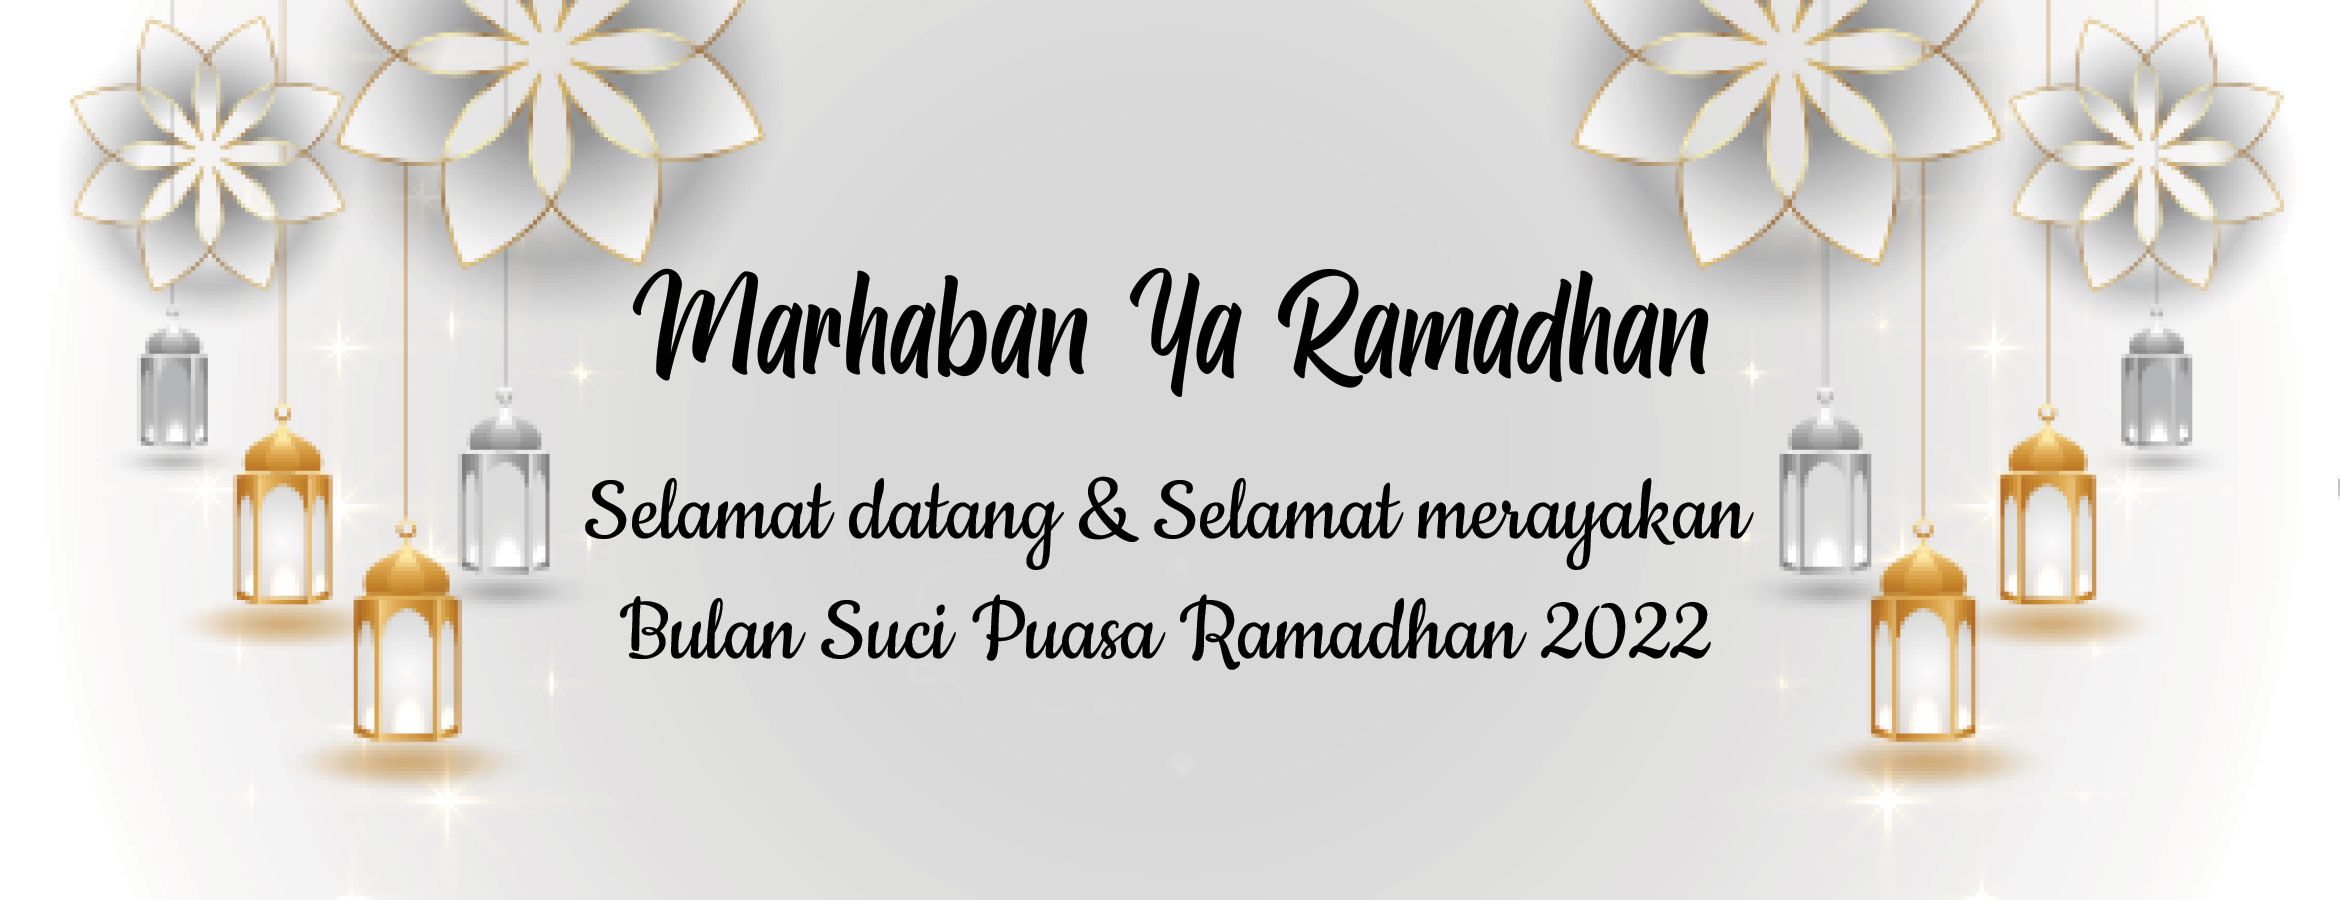 Flyer Ramadhan 2022